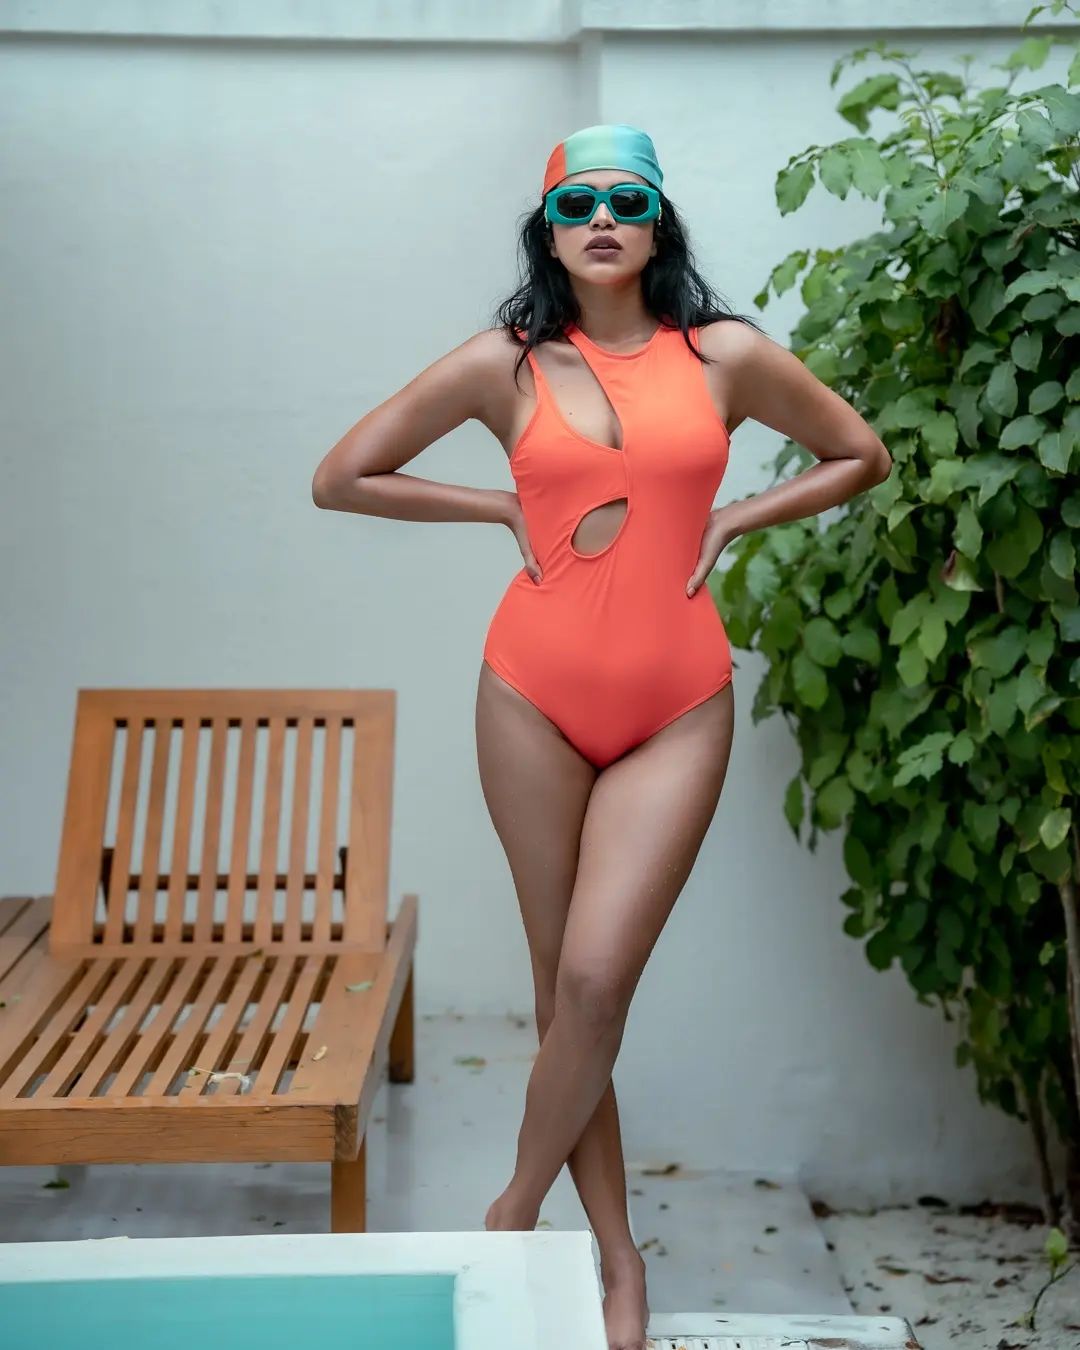 actress amala paul hot photos in single bikini dress